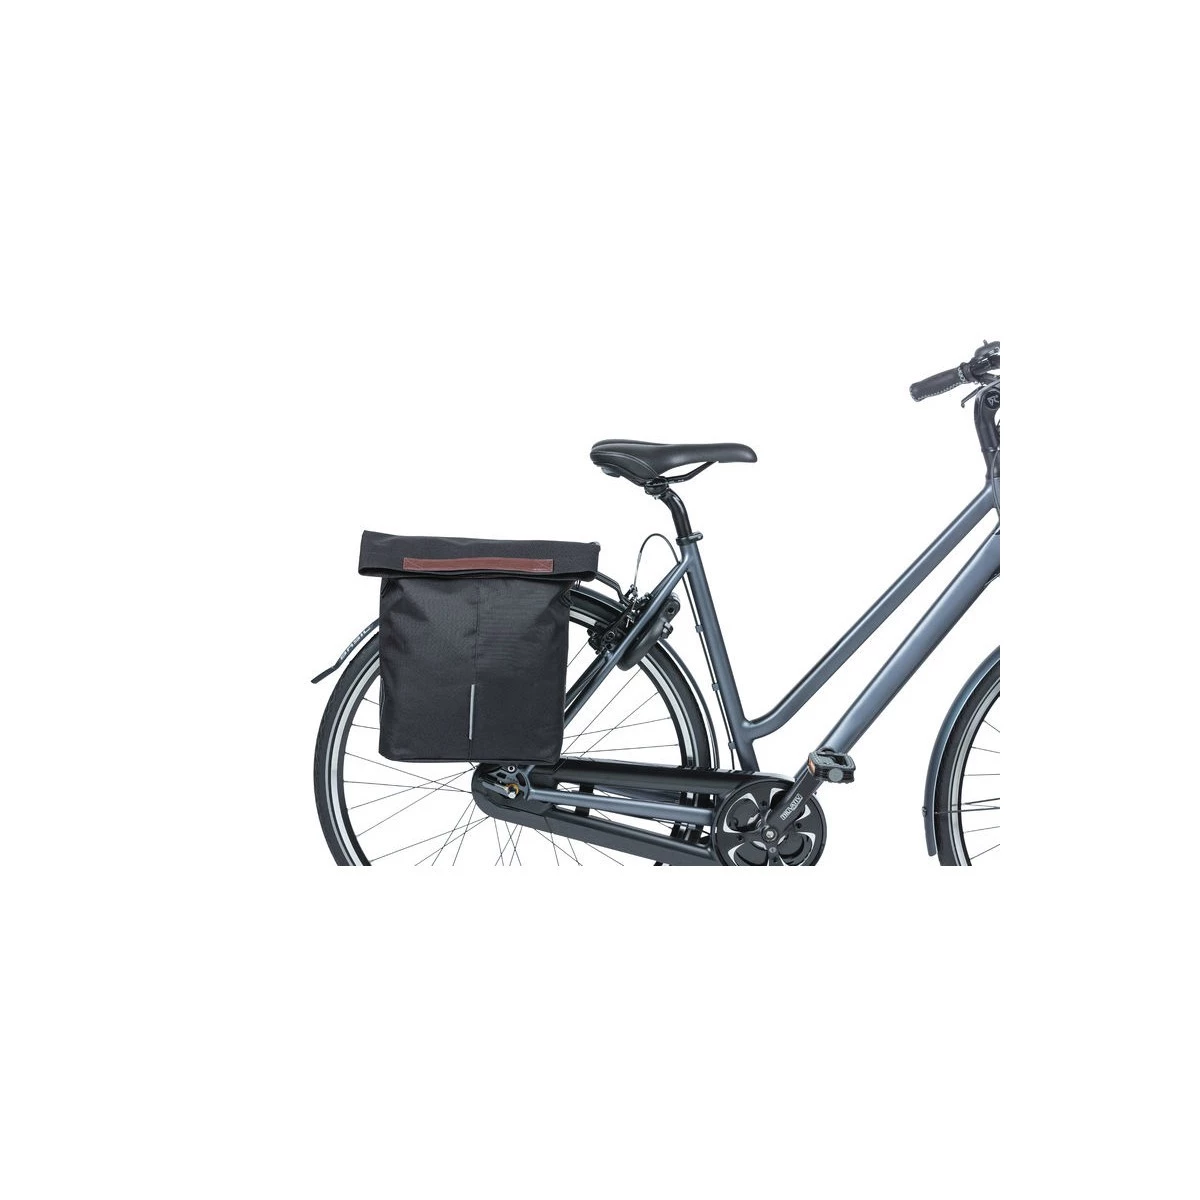 Basil  Sac De Vélo City Shopper Shopper Bag 14/16L Noir